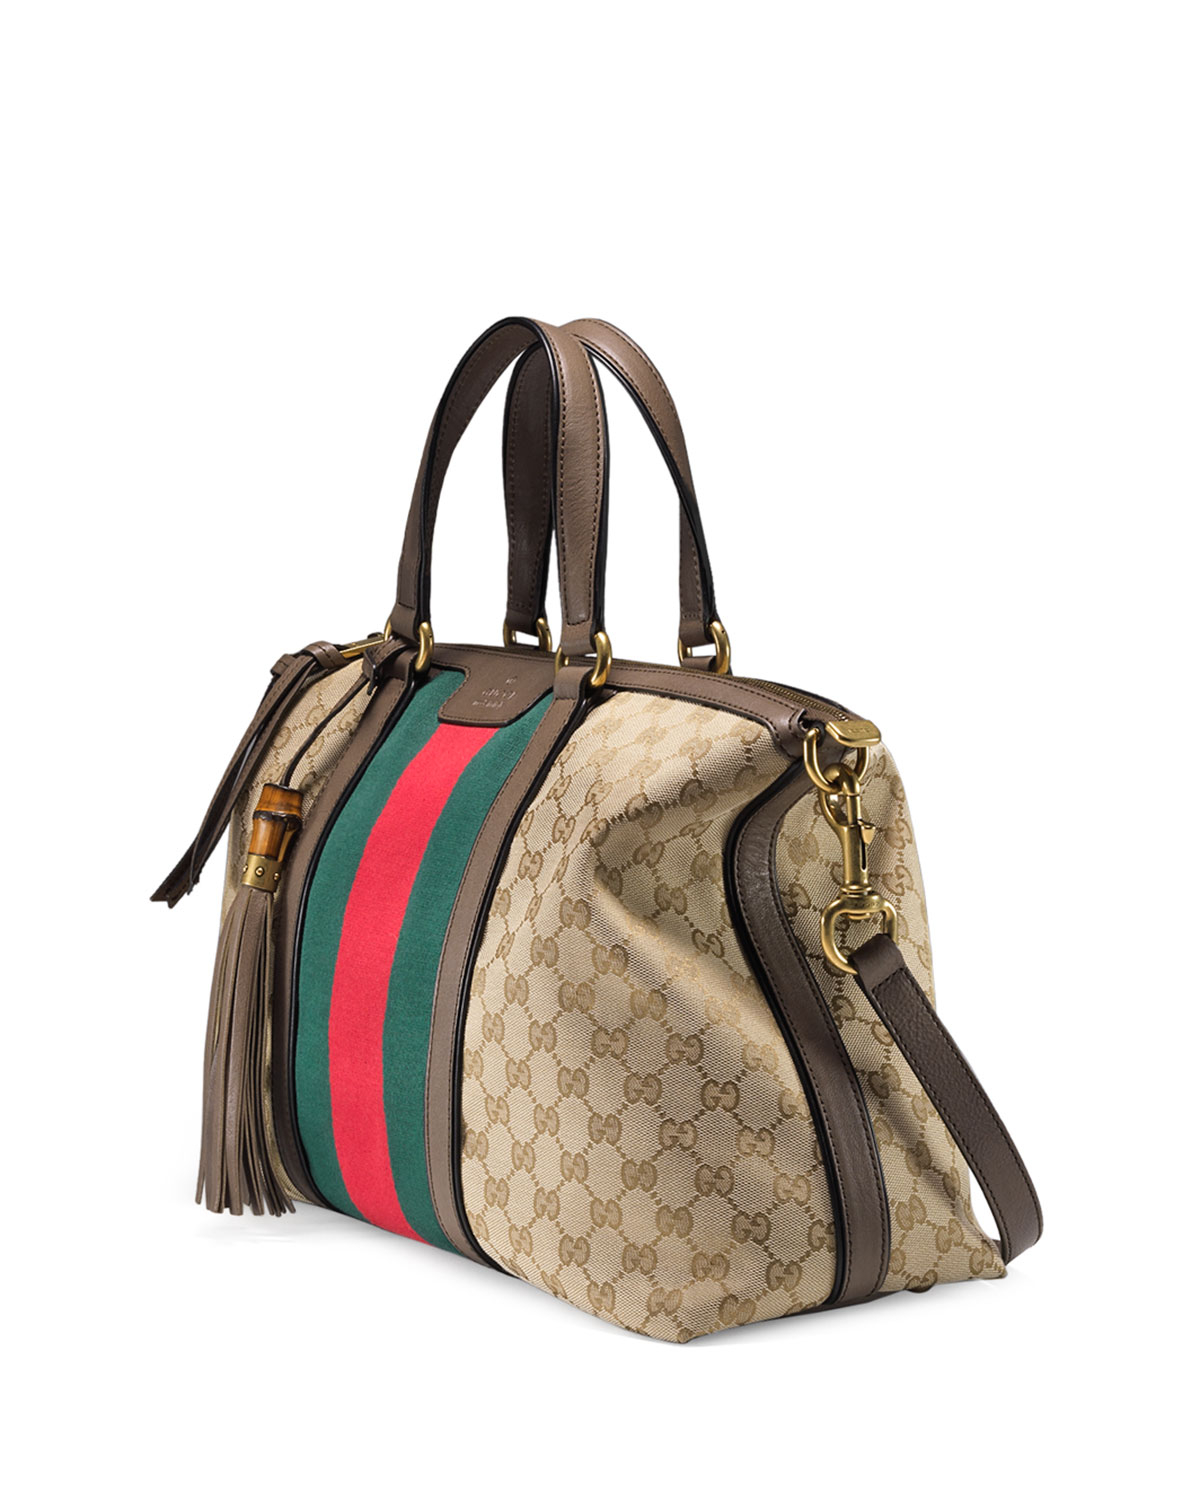 Gucci Rania Original Gg Canvas Tote Bag in Brown - Lyst